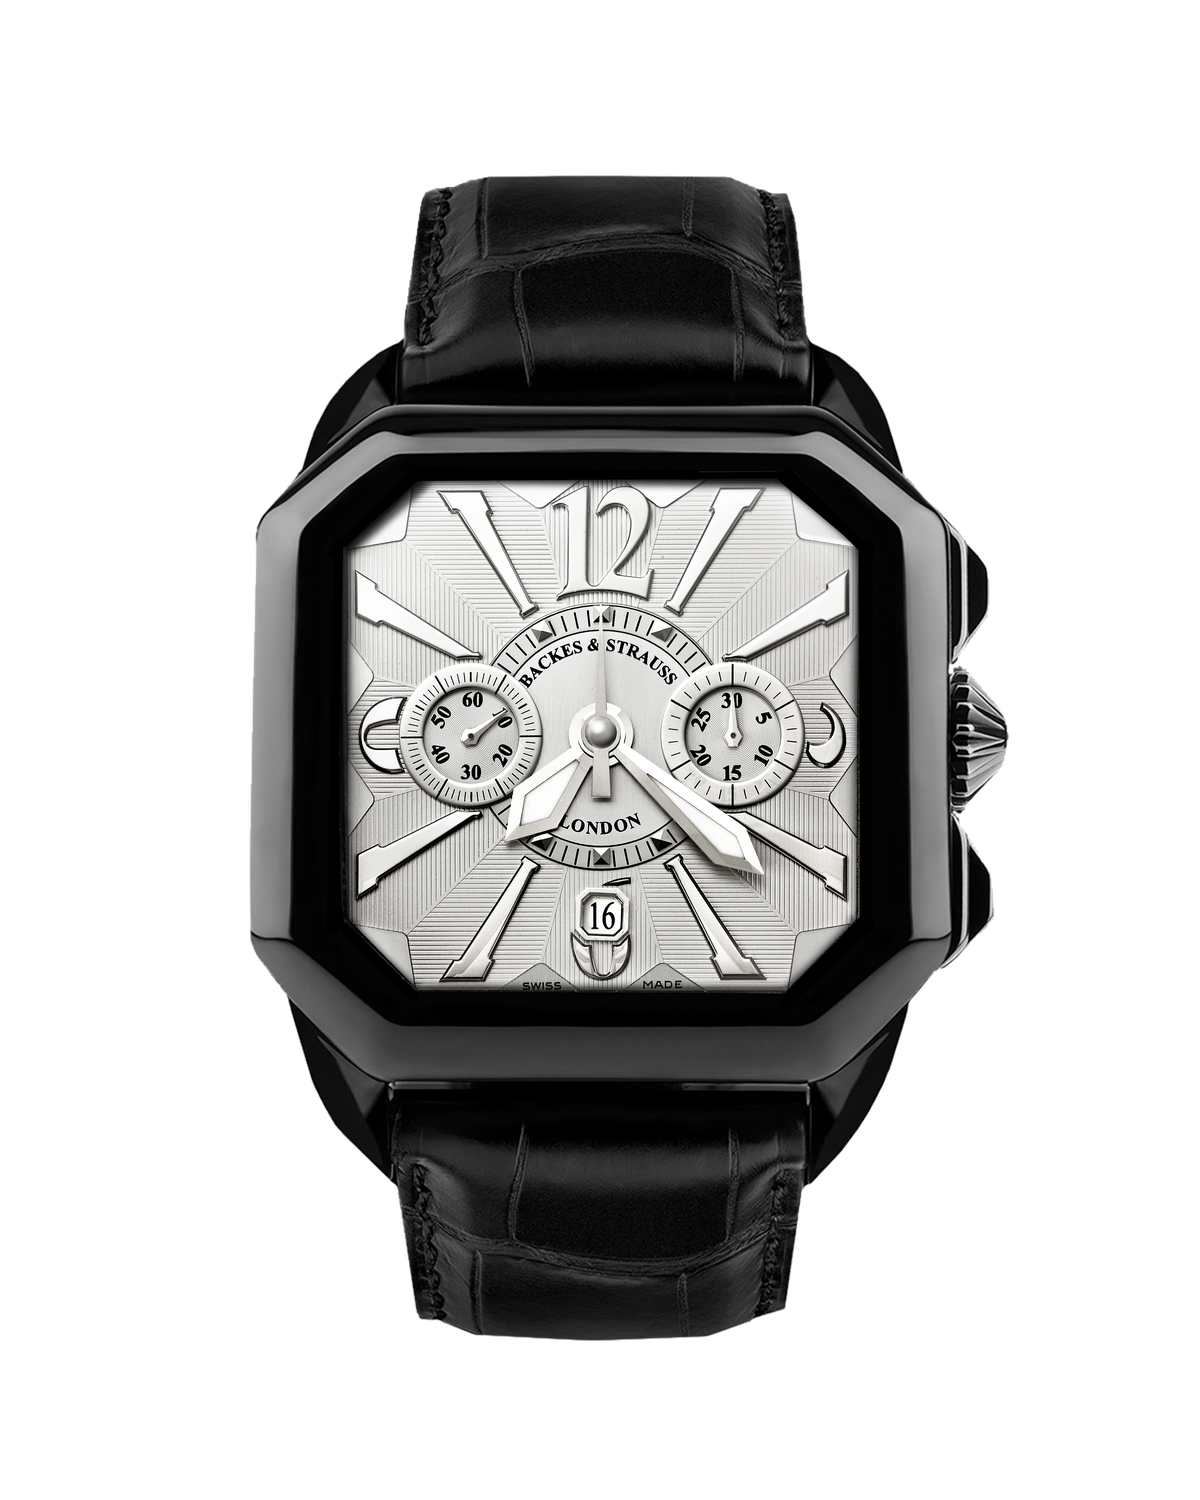 Berkeley Black Knight Chronograph 40 Luxury Diamond Watch for Men - 40mm Black PVD Steel